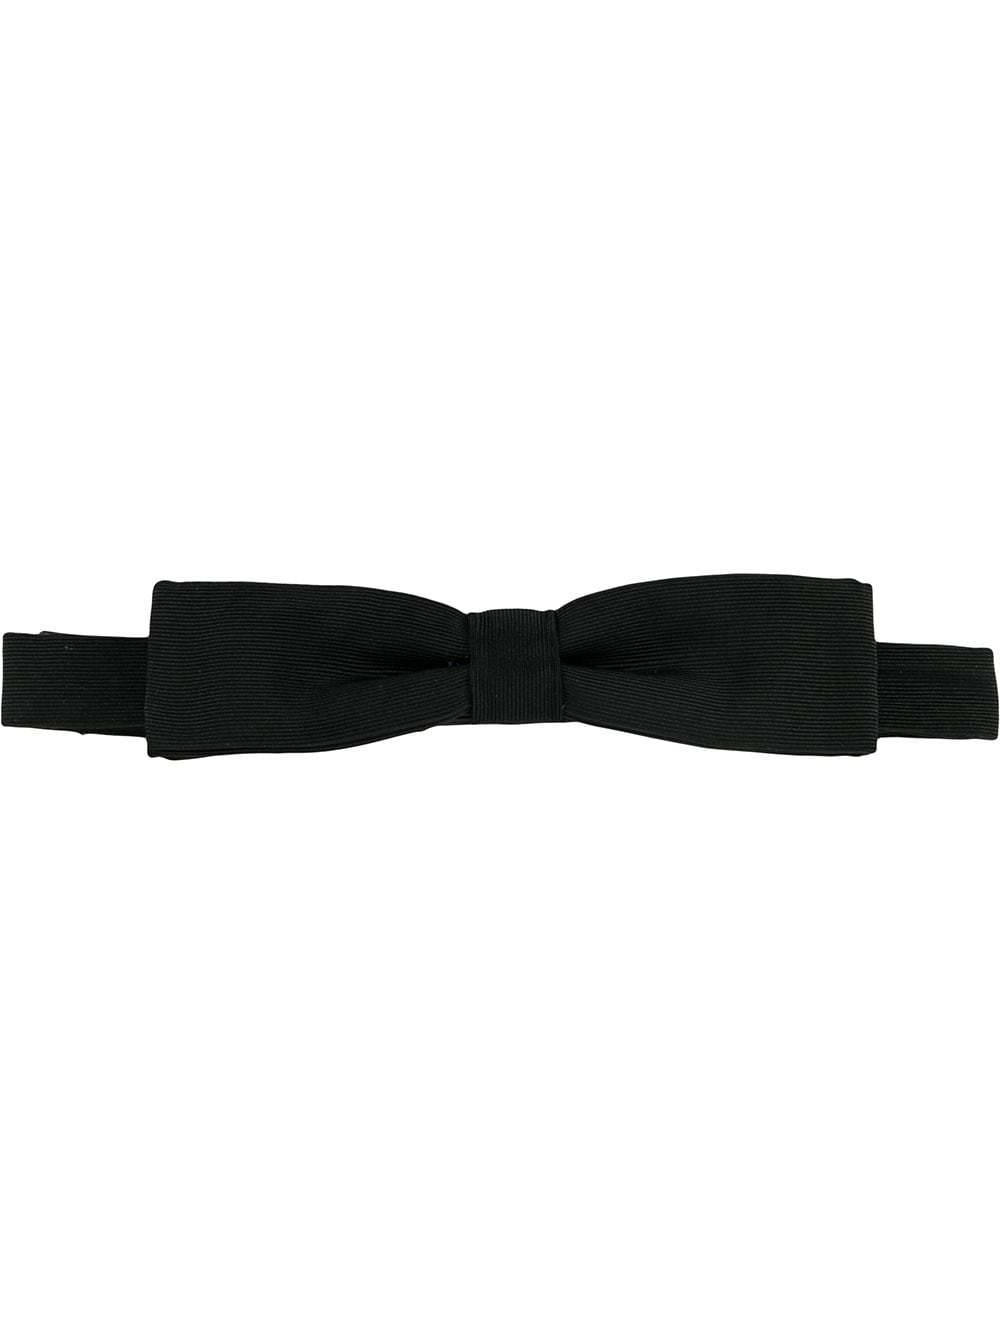 Dsquared2 ribbed bow tie - Black von Dsquared2